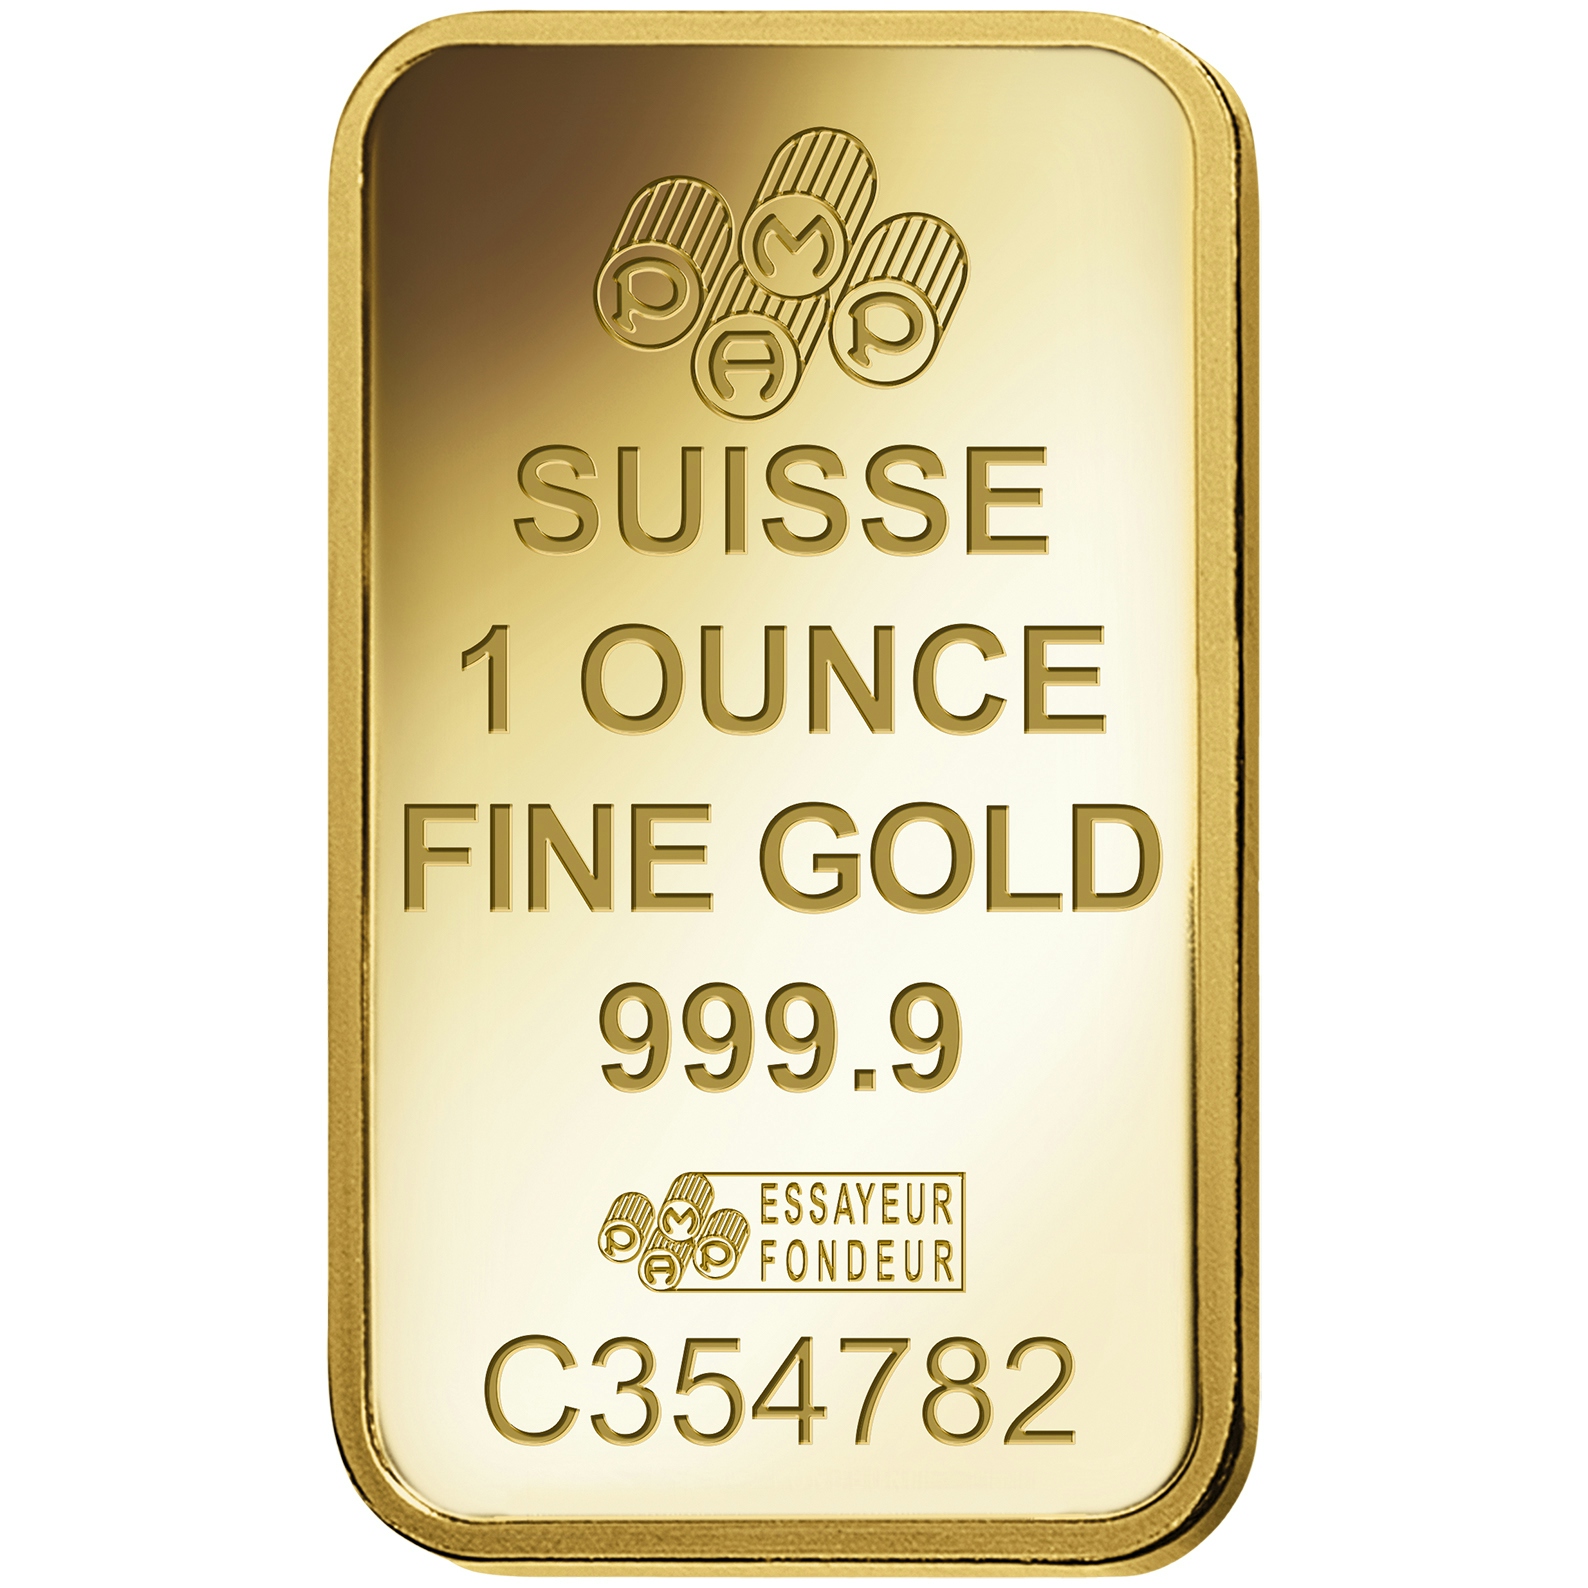 Invest in 1 oz Fine Gold Buddha - PAMP Swiss - Back